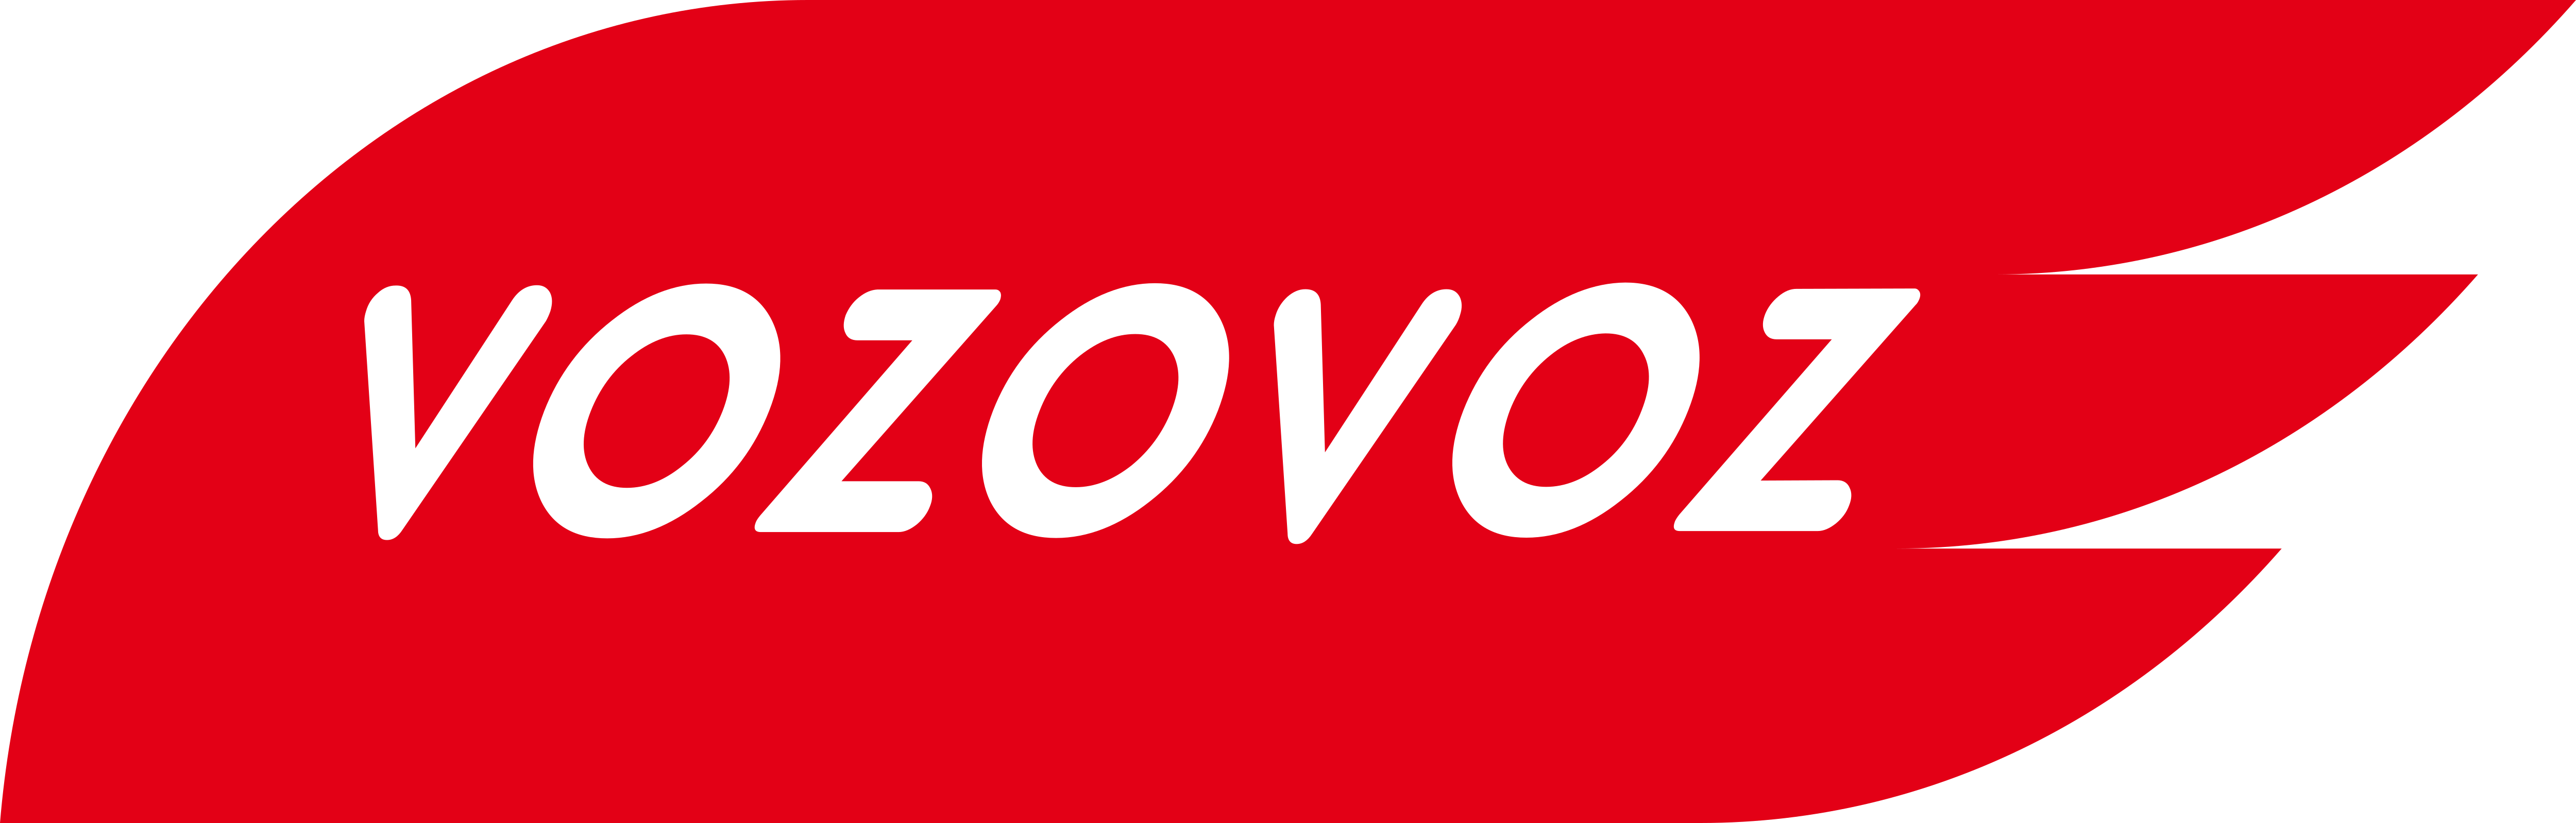 Возовоз логотип. ООО Возовоз. Vozovoz транспортная компания. Логотип транспортной компании.